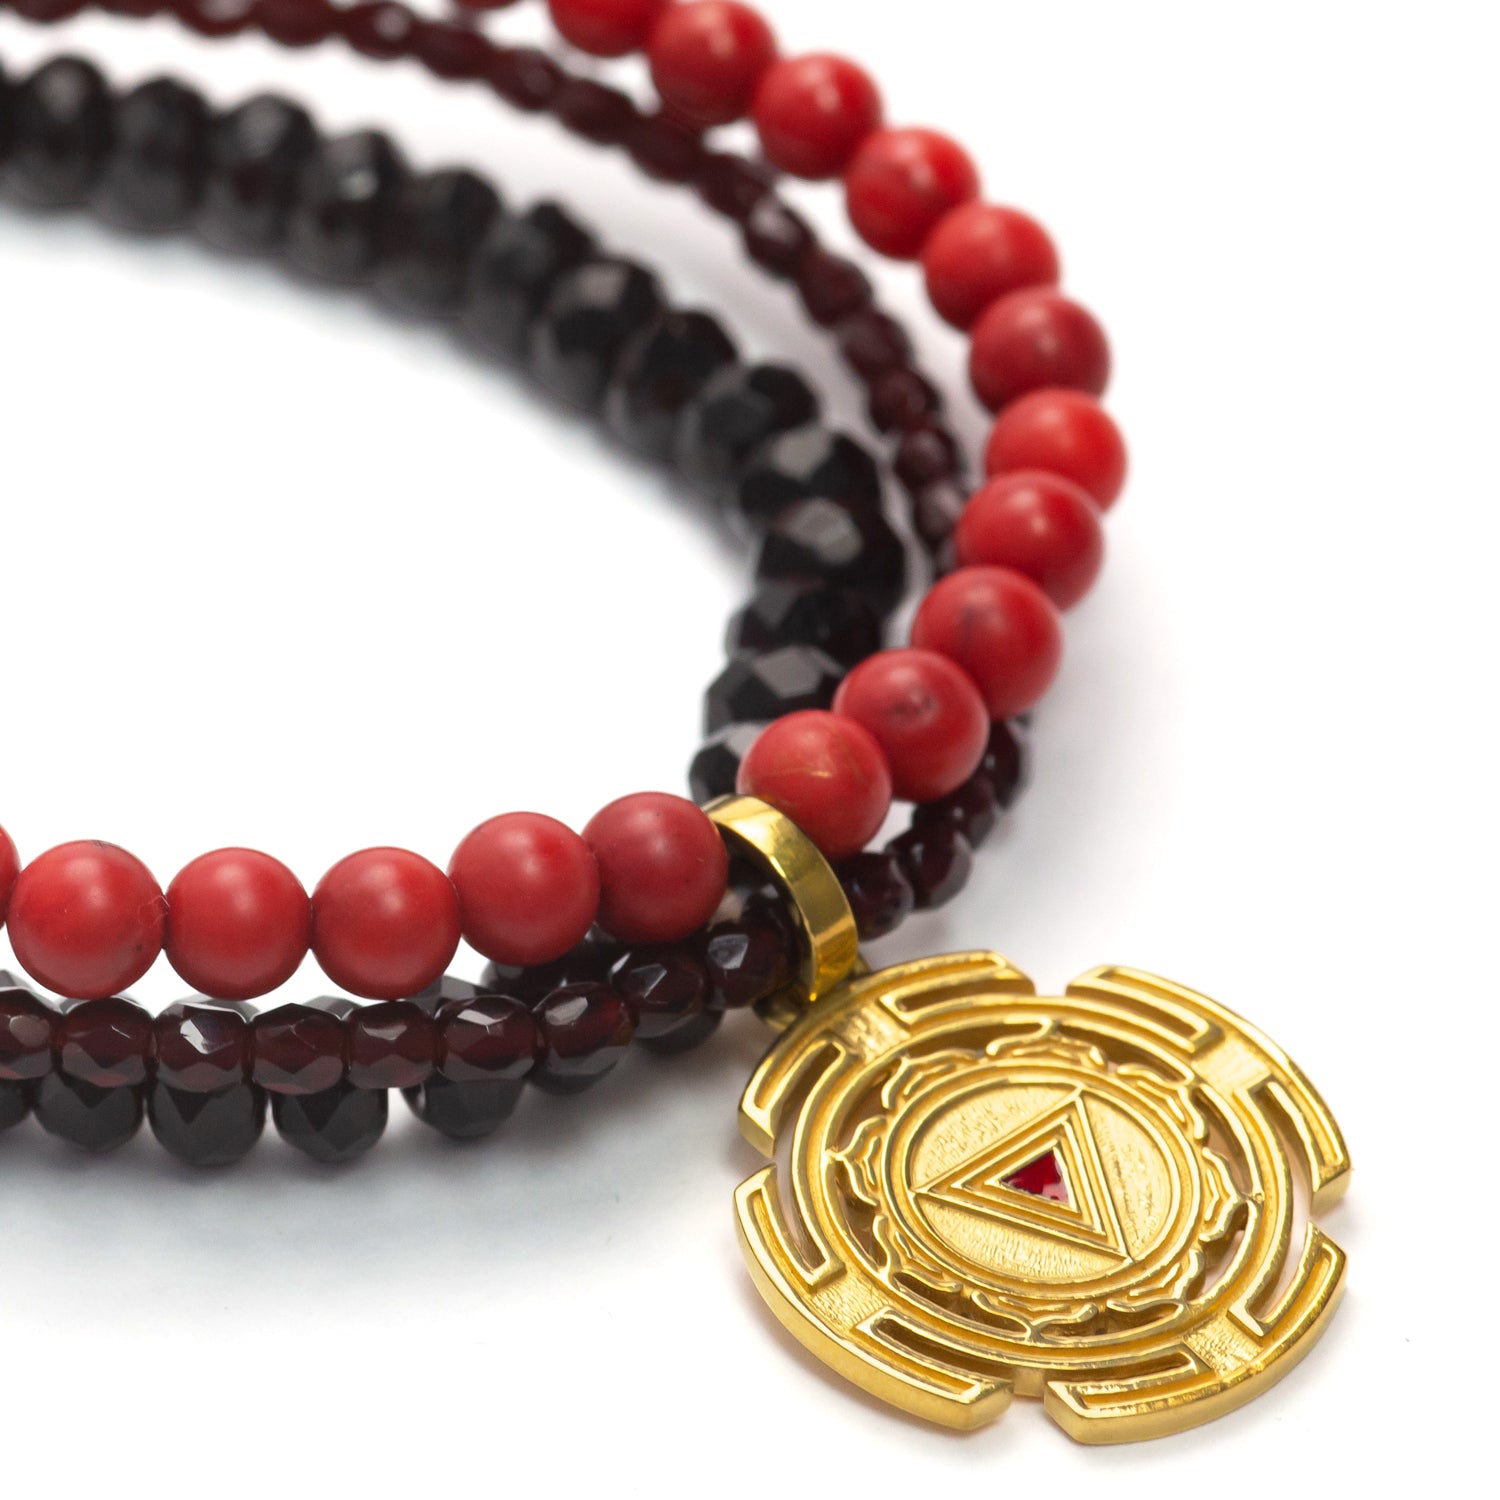  Gold-plated Kali Yantra Gemstone Bracelet by ETERNAL BLISS - Spiritual Jewelry